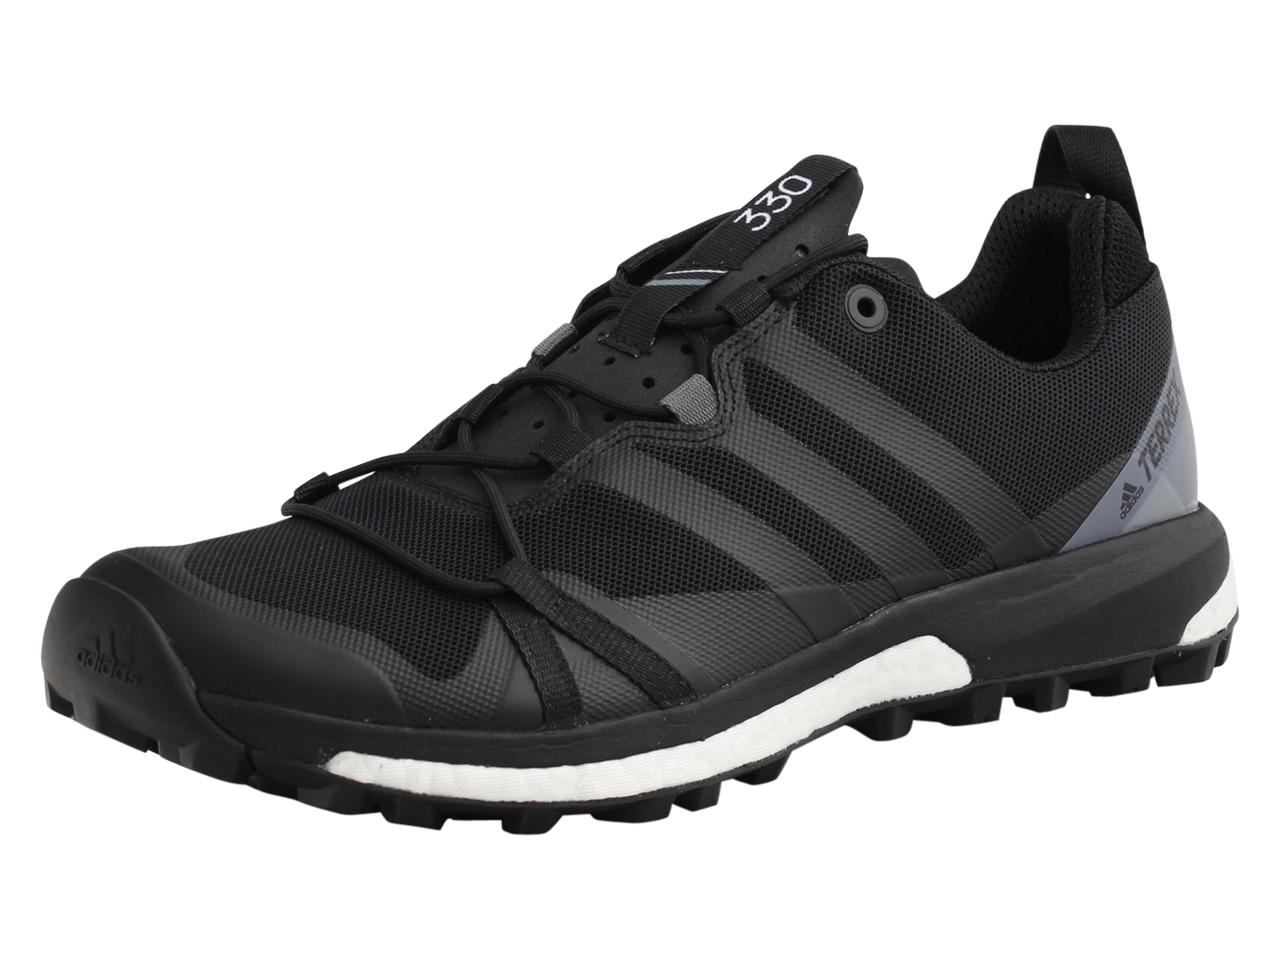 Adidas Men's Terrex Agravic All Terrain Trail Running Sneakers Shoes - Black - 10.5 D(M) US